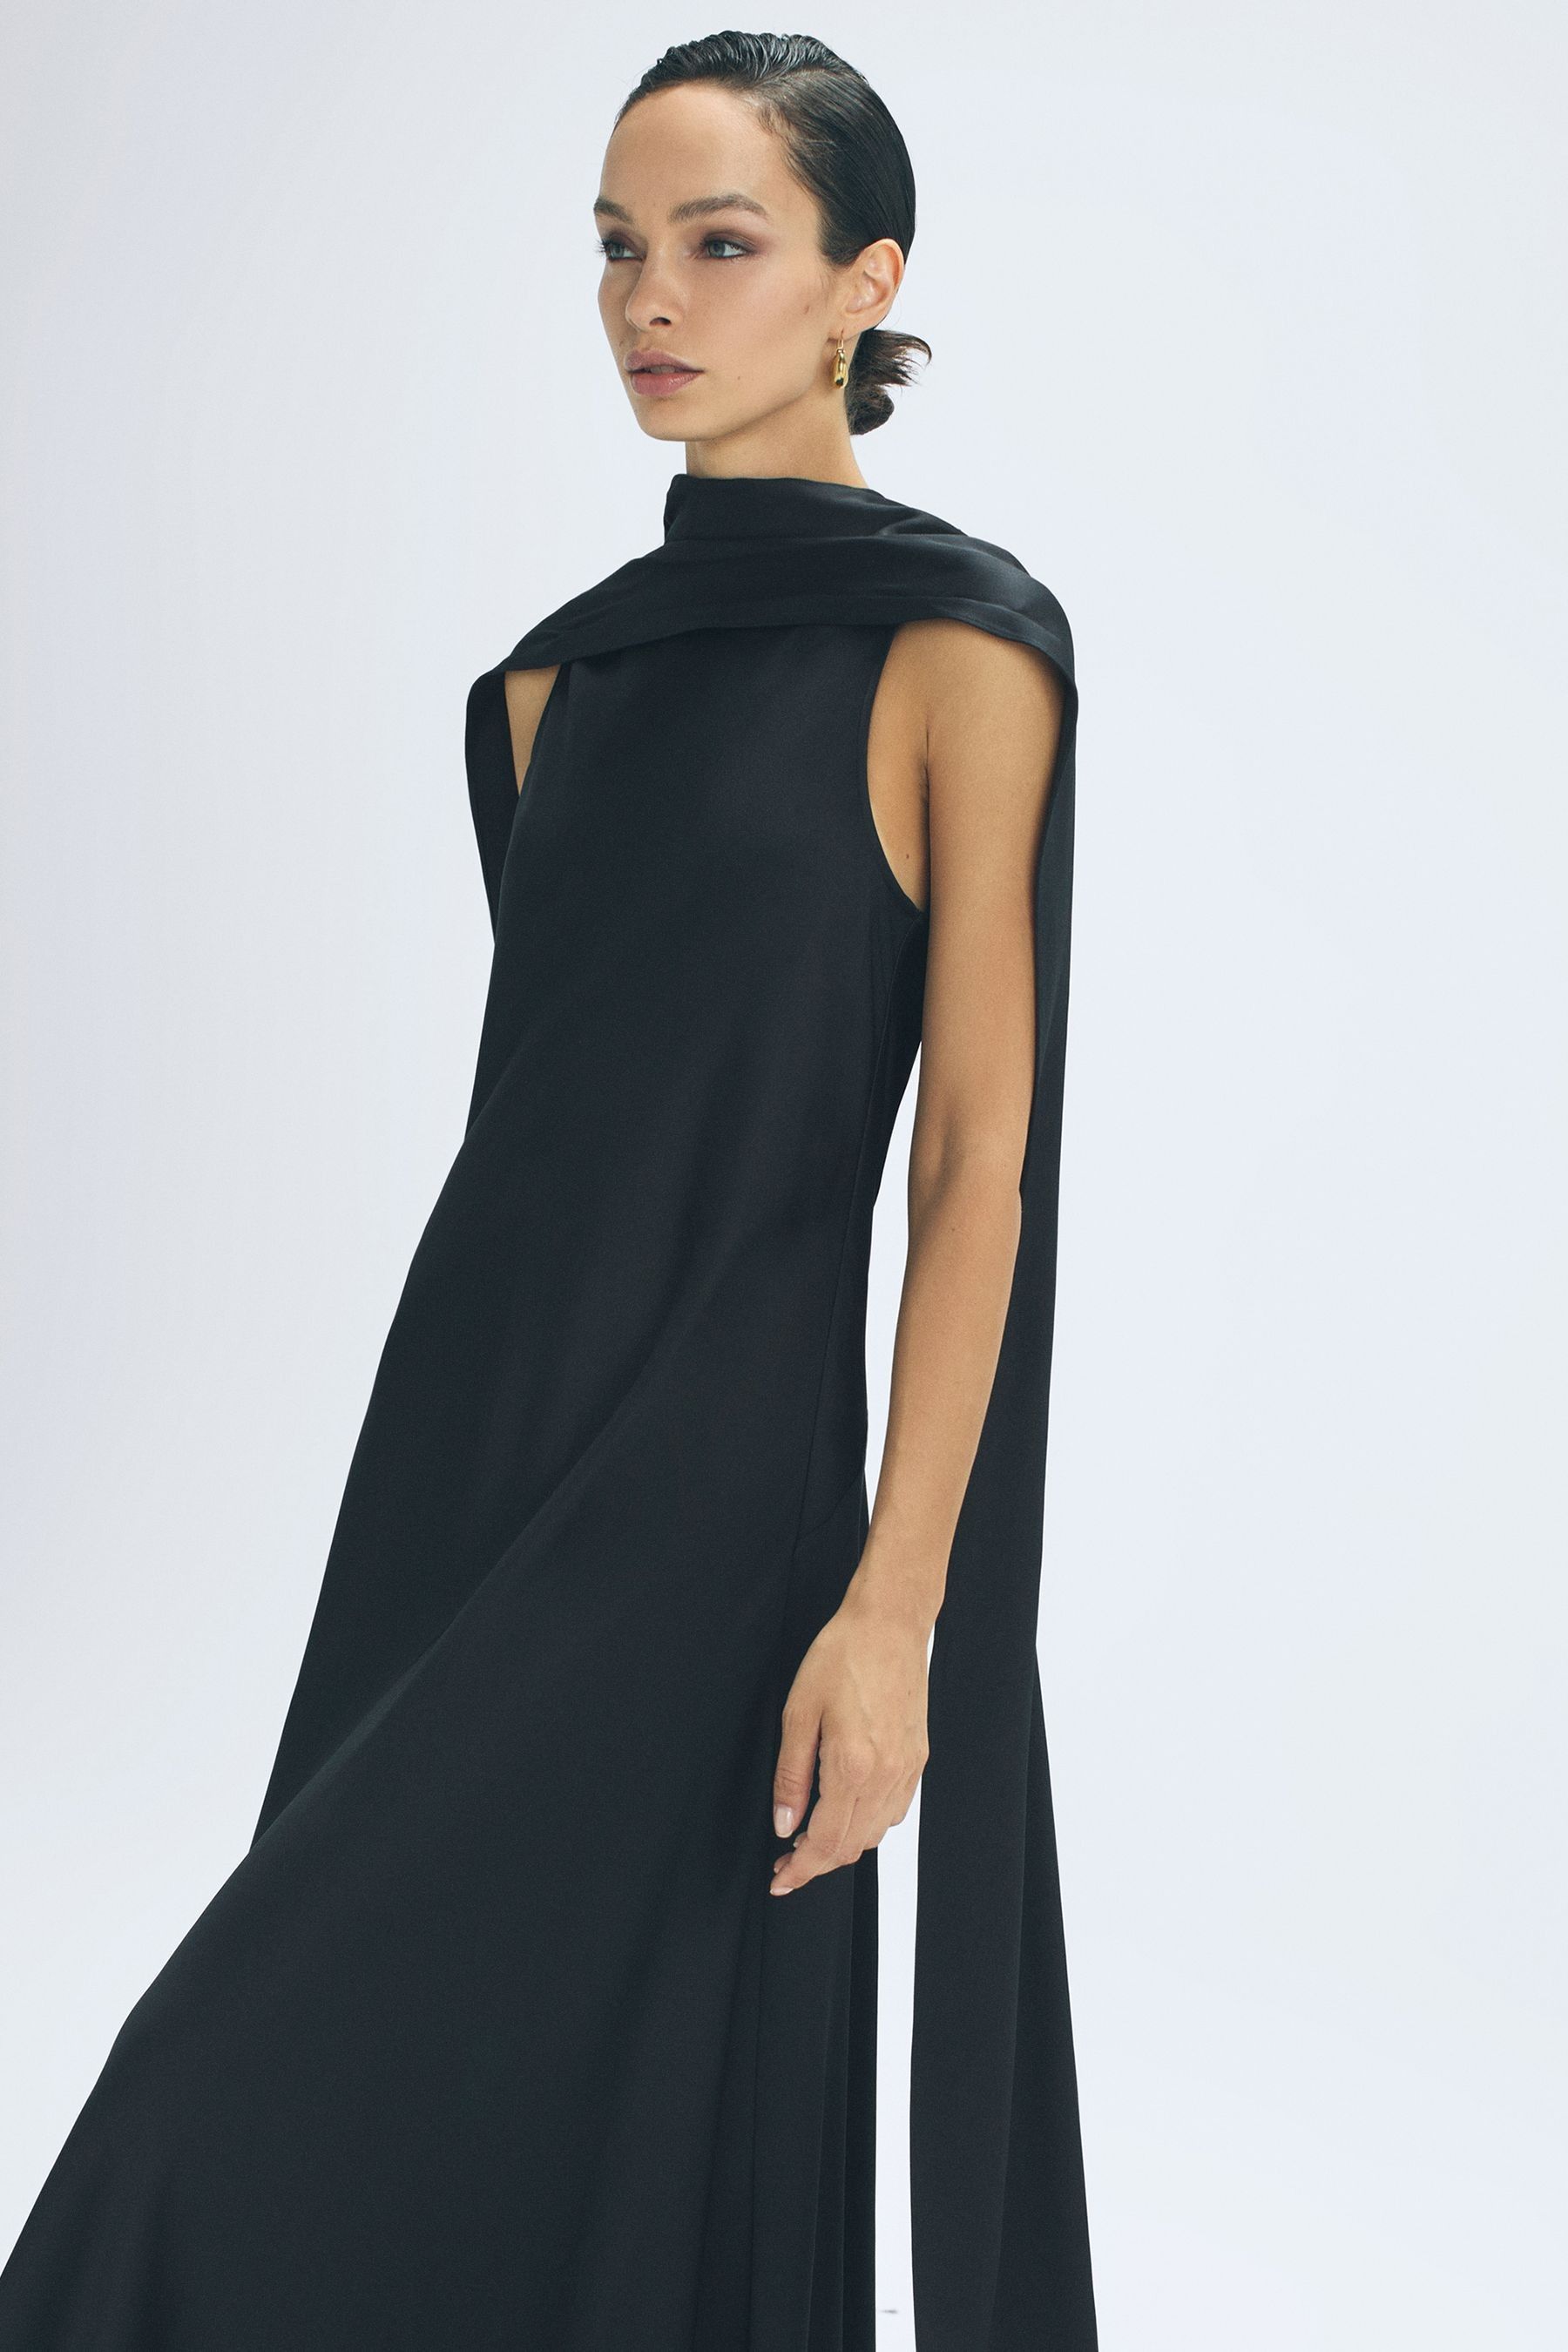 Reiss Keira - Black Cape Maxi Dress, Us 6